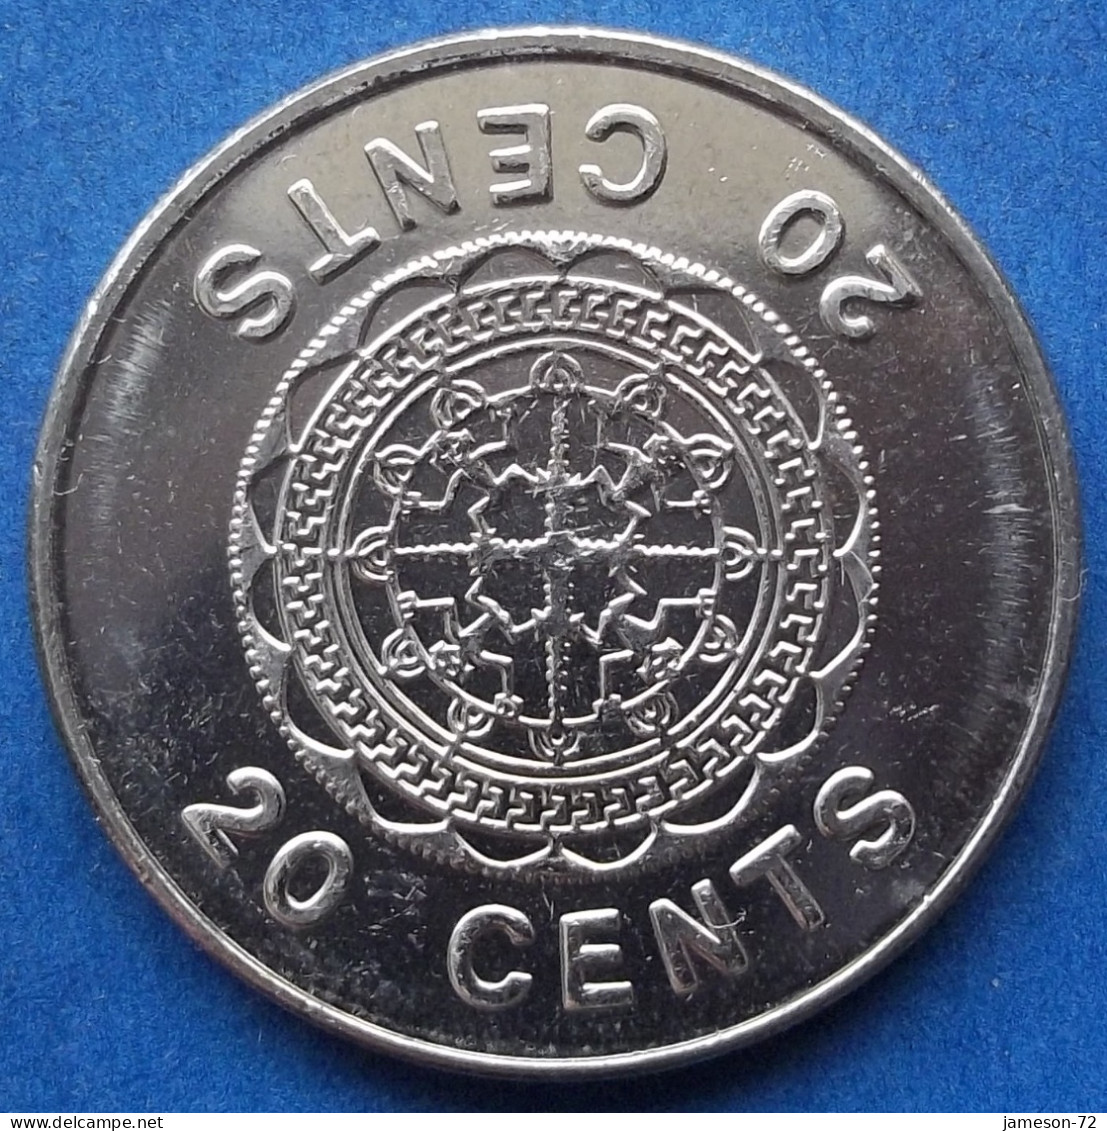 SOLOMON ISLANDS - 20 Censt 2005 "Malaita Pendant" KM# 28 Commonwealth Nation, Elizabeth II - Edelweiss Coins - Salomonen